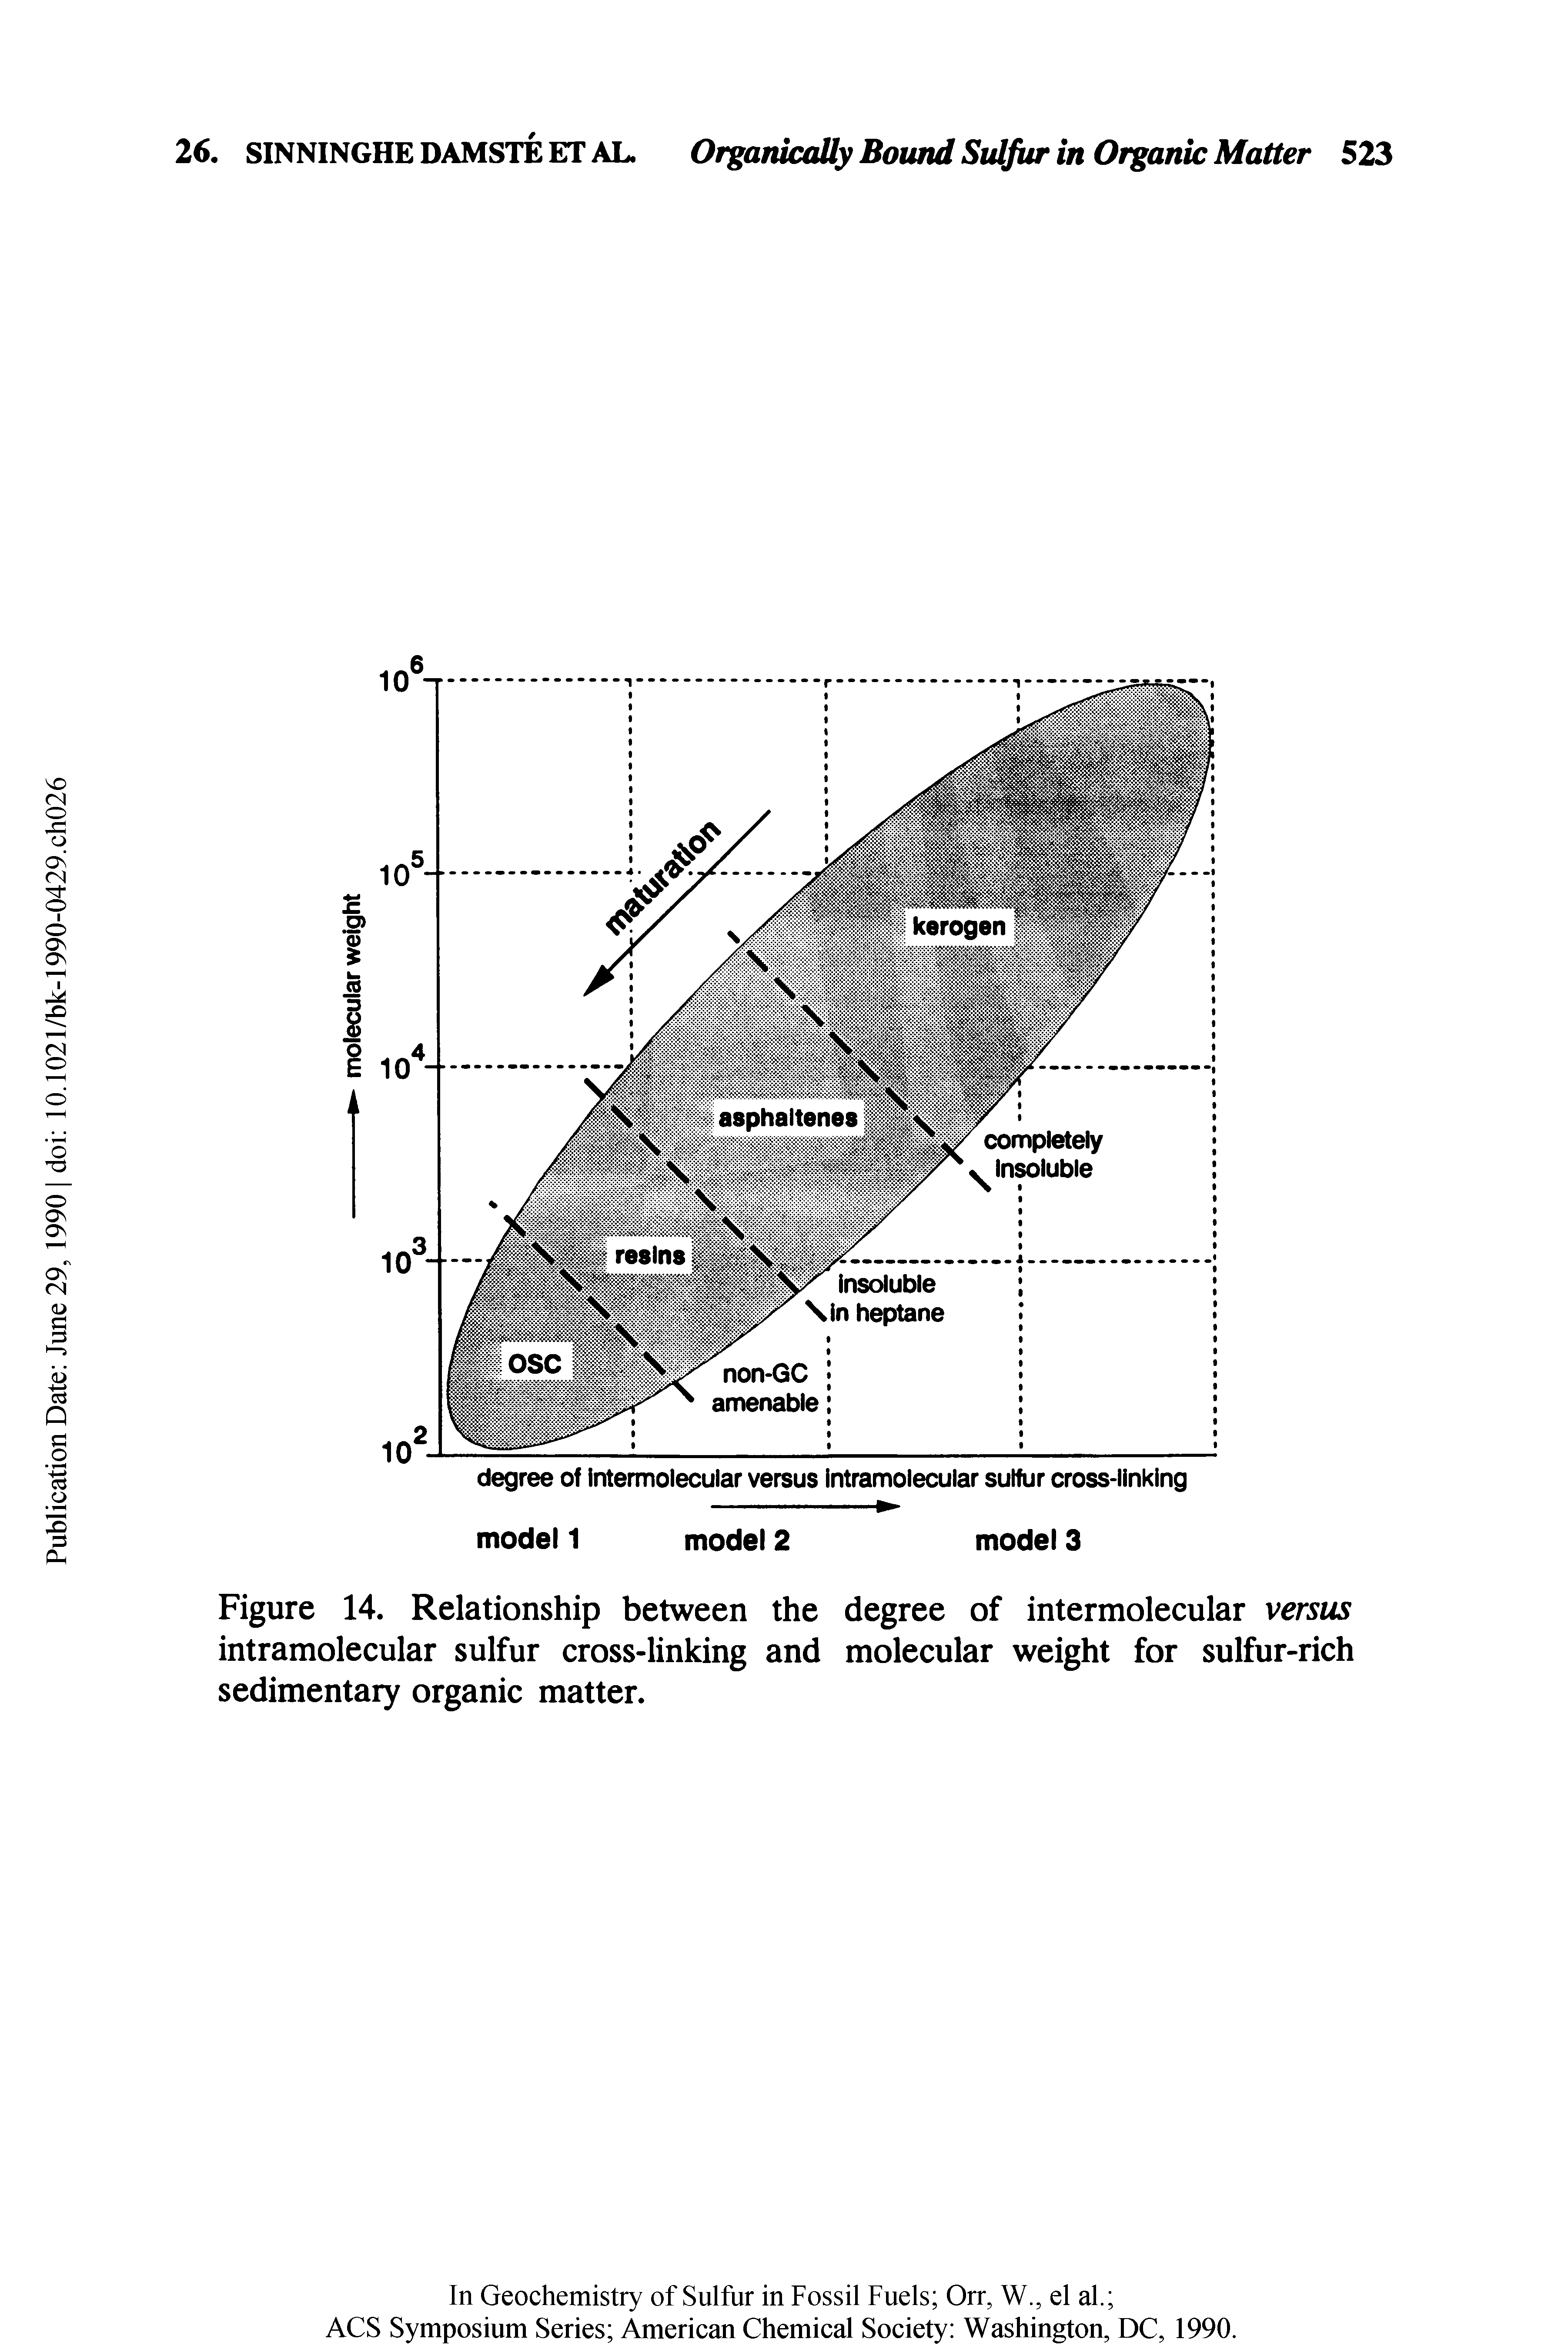 Figure 14. Relationship between the degree of intermolecular versus intramolecular sulfur cross-linking and molecular weight for sulfur-rich sedimentary organic matter.